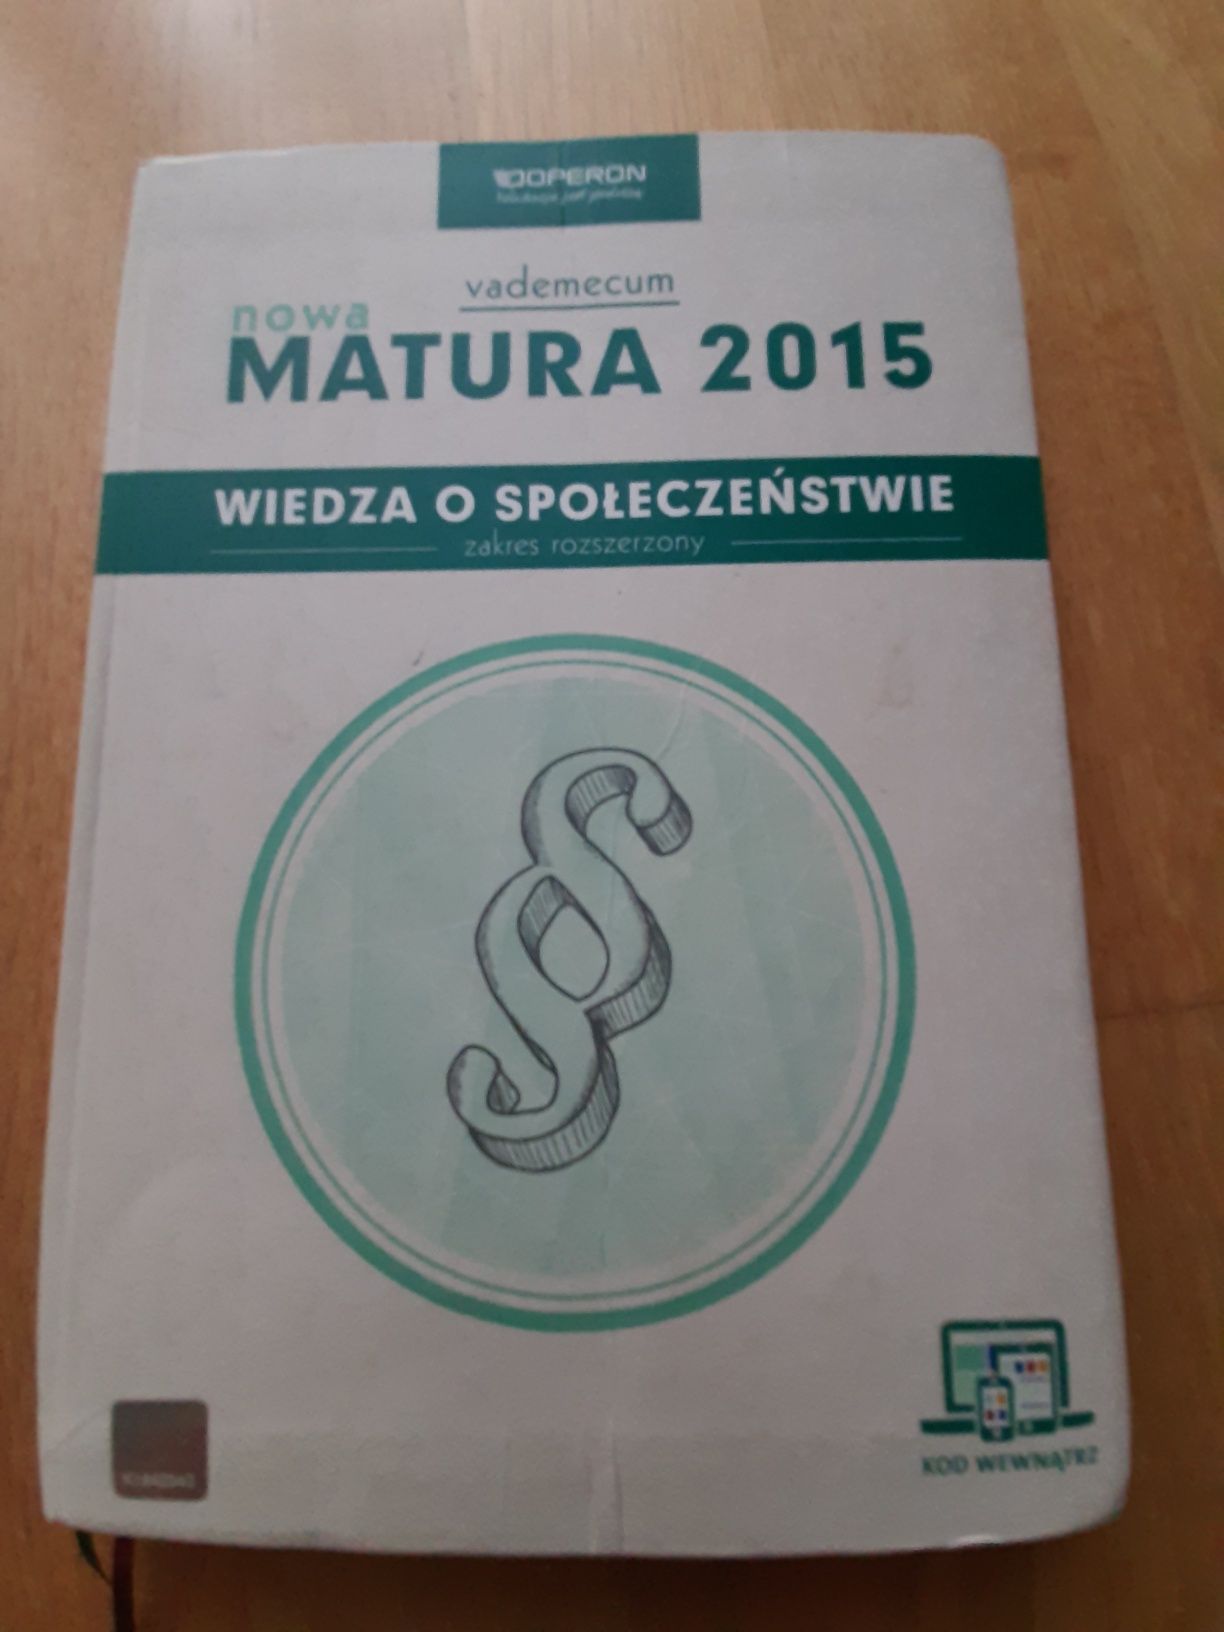 Matura 2015 WOS zakres rozszerzony (RKS)